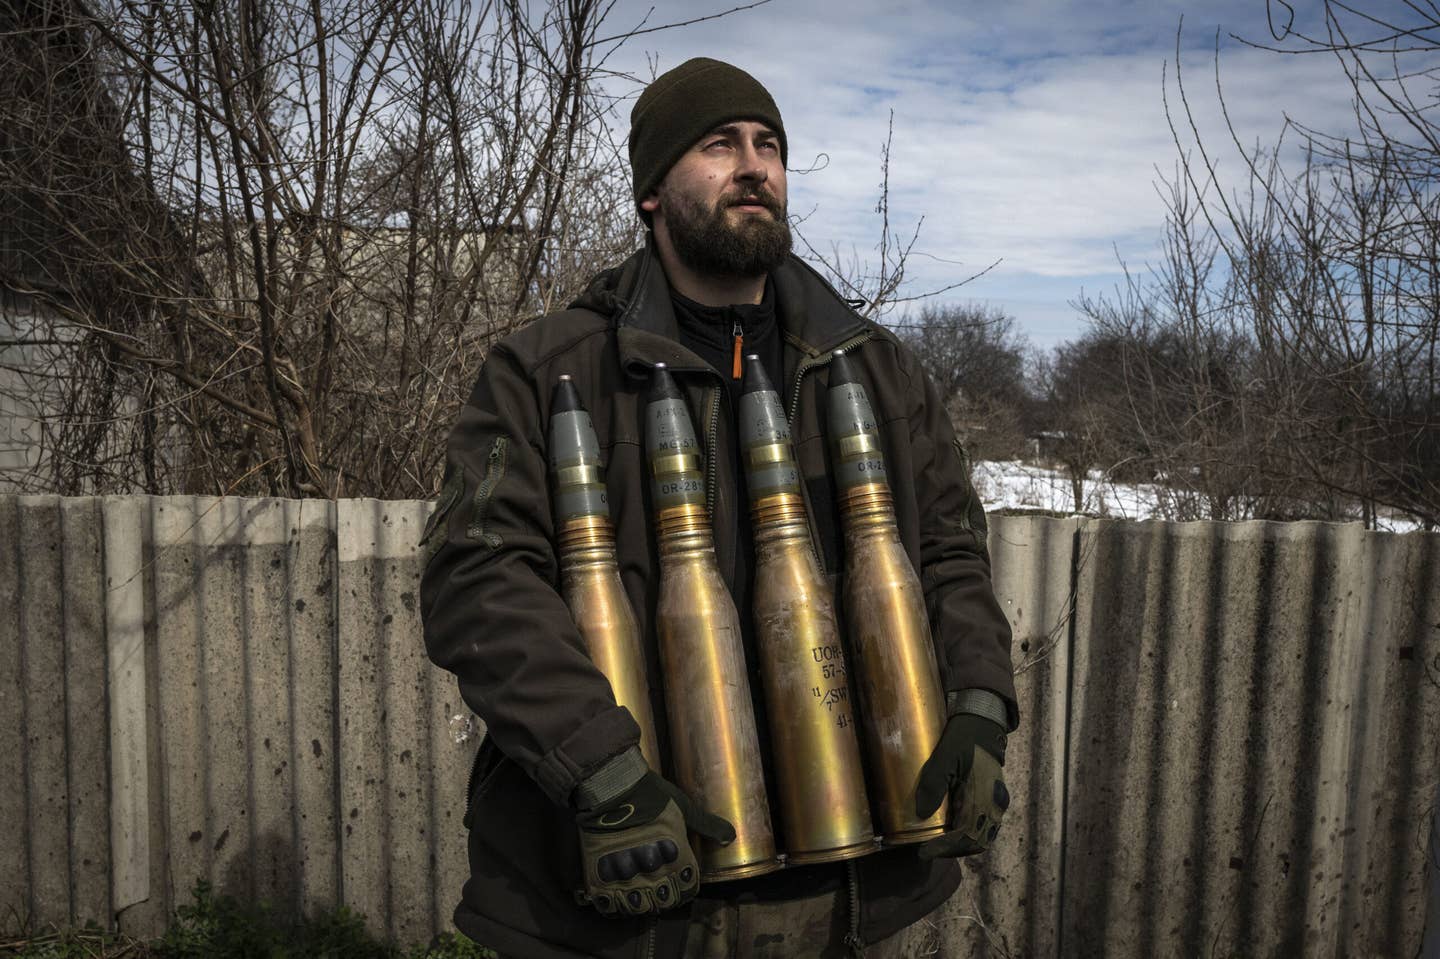 A Ukrainian soldier holds artillery ammunition near the frontline area in Bakhmut on April 02, 2023. (Photo by Muhammed Enes Yildirim/Anadolu Agency via Getty Images)